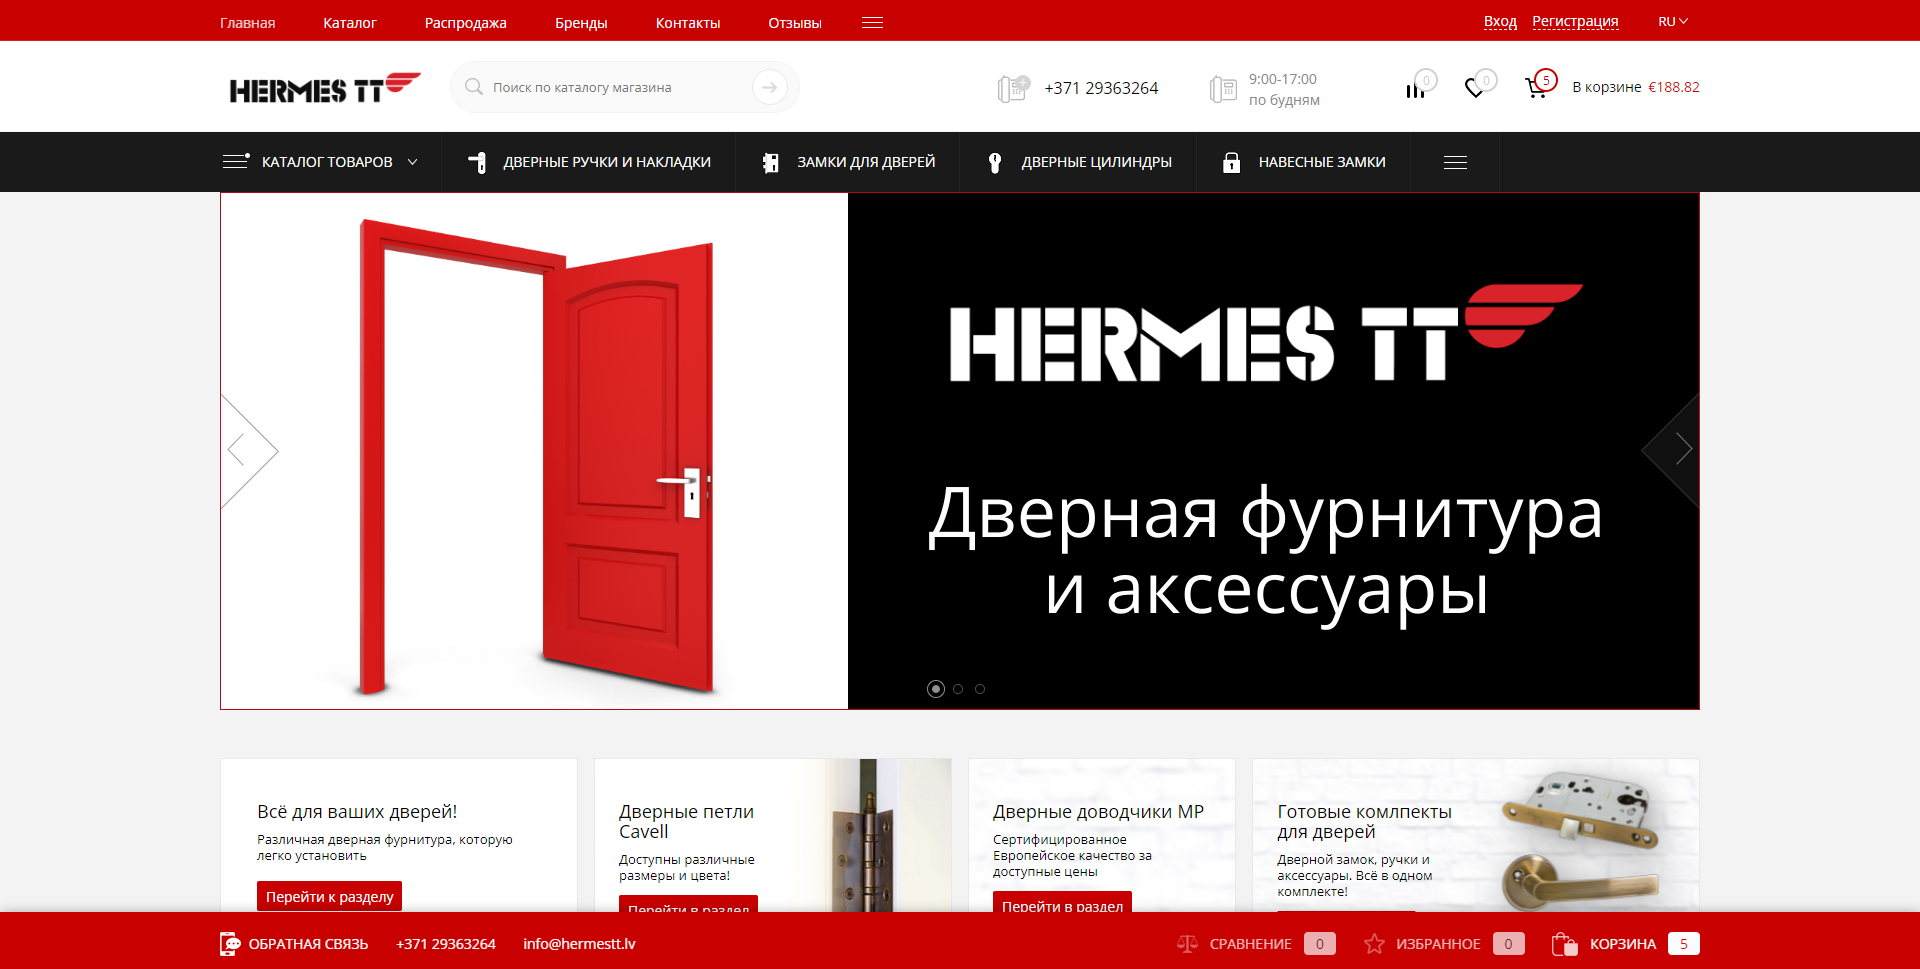 hermes tt - интернет-магазин дверной фурнитуры